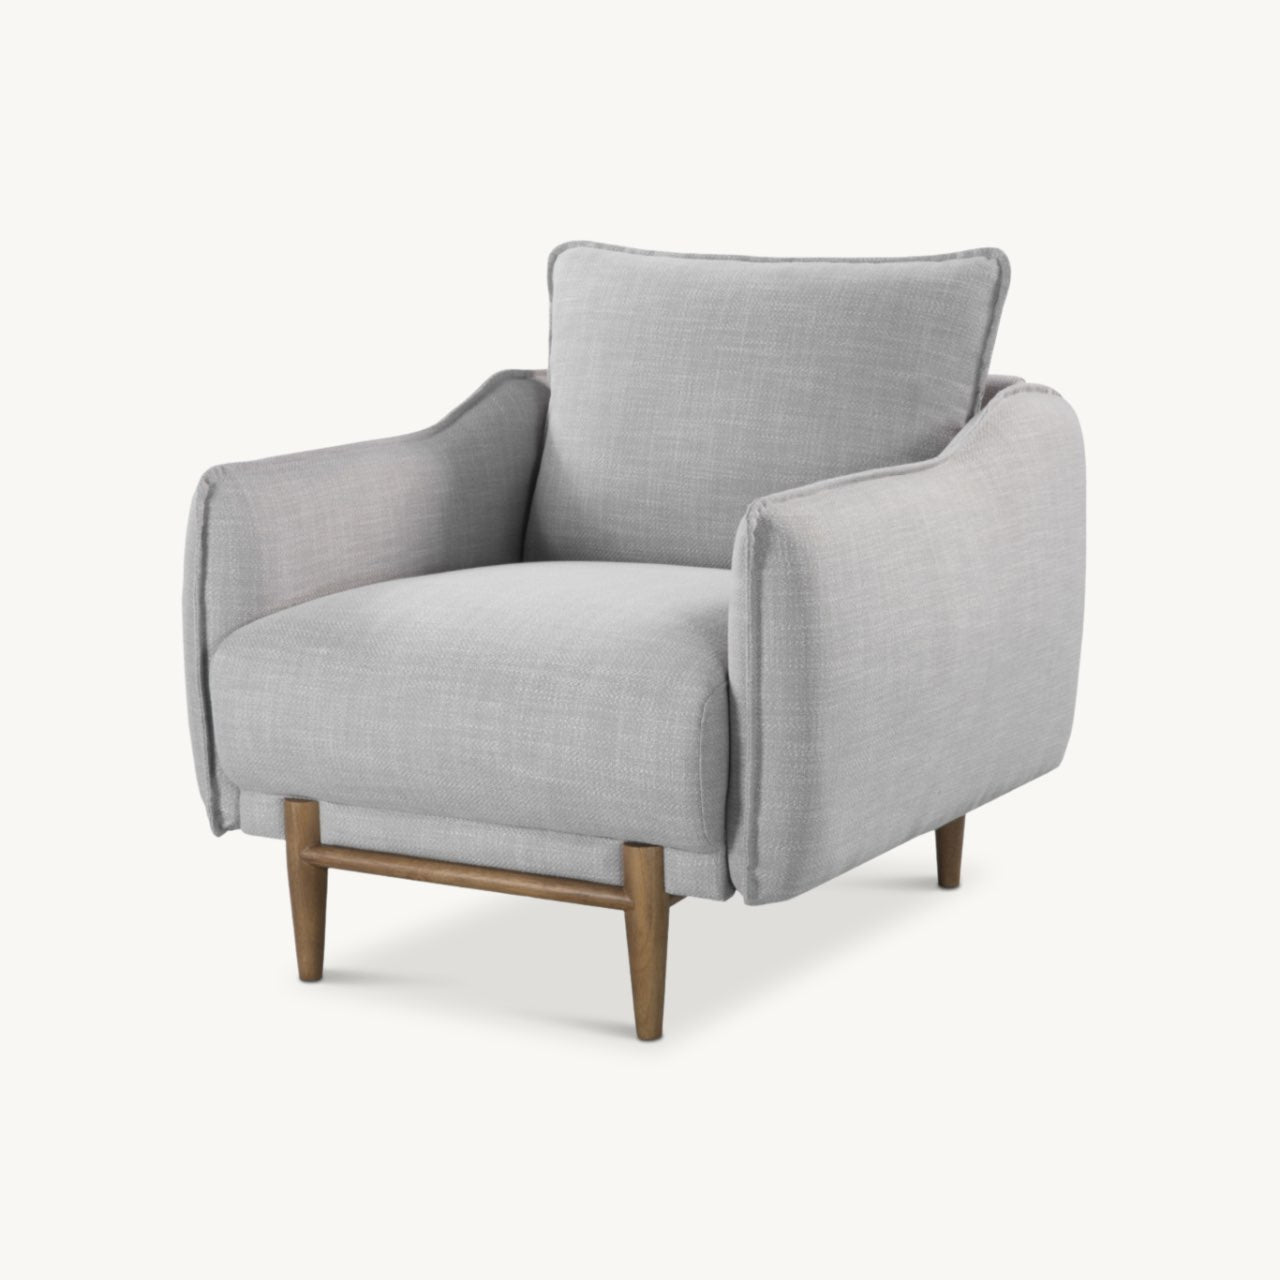 modern designer armchair in grey linen upholstery